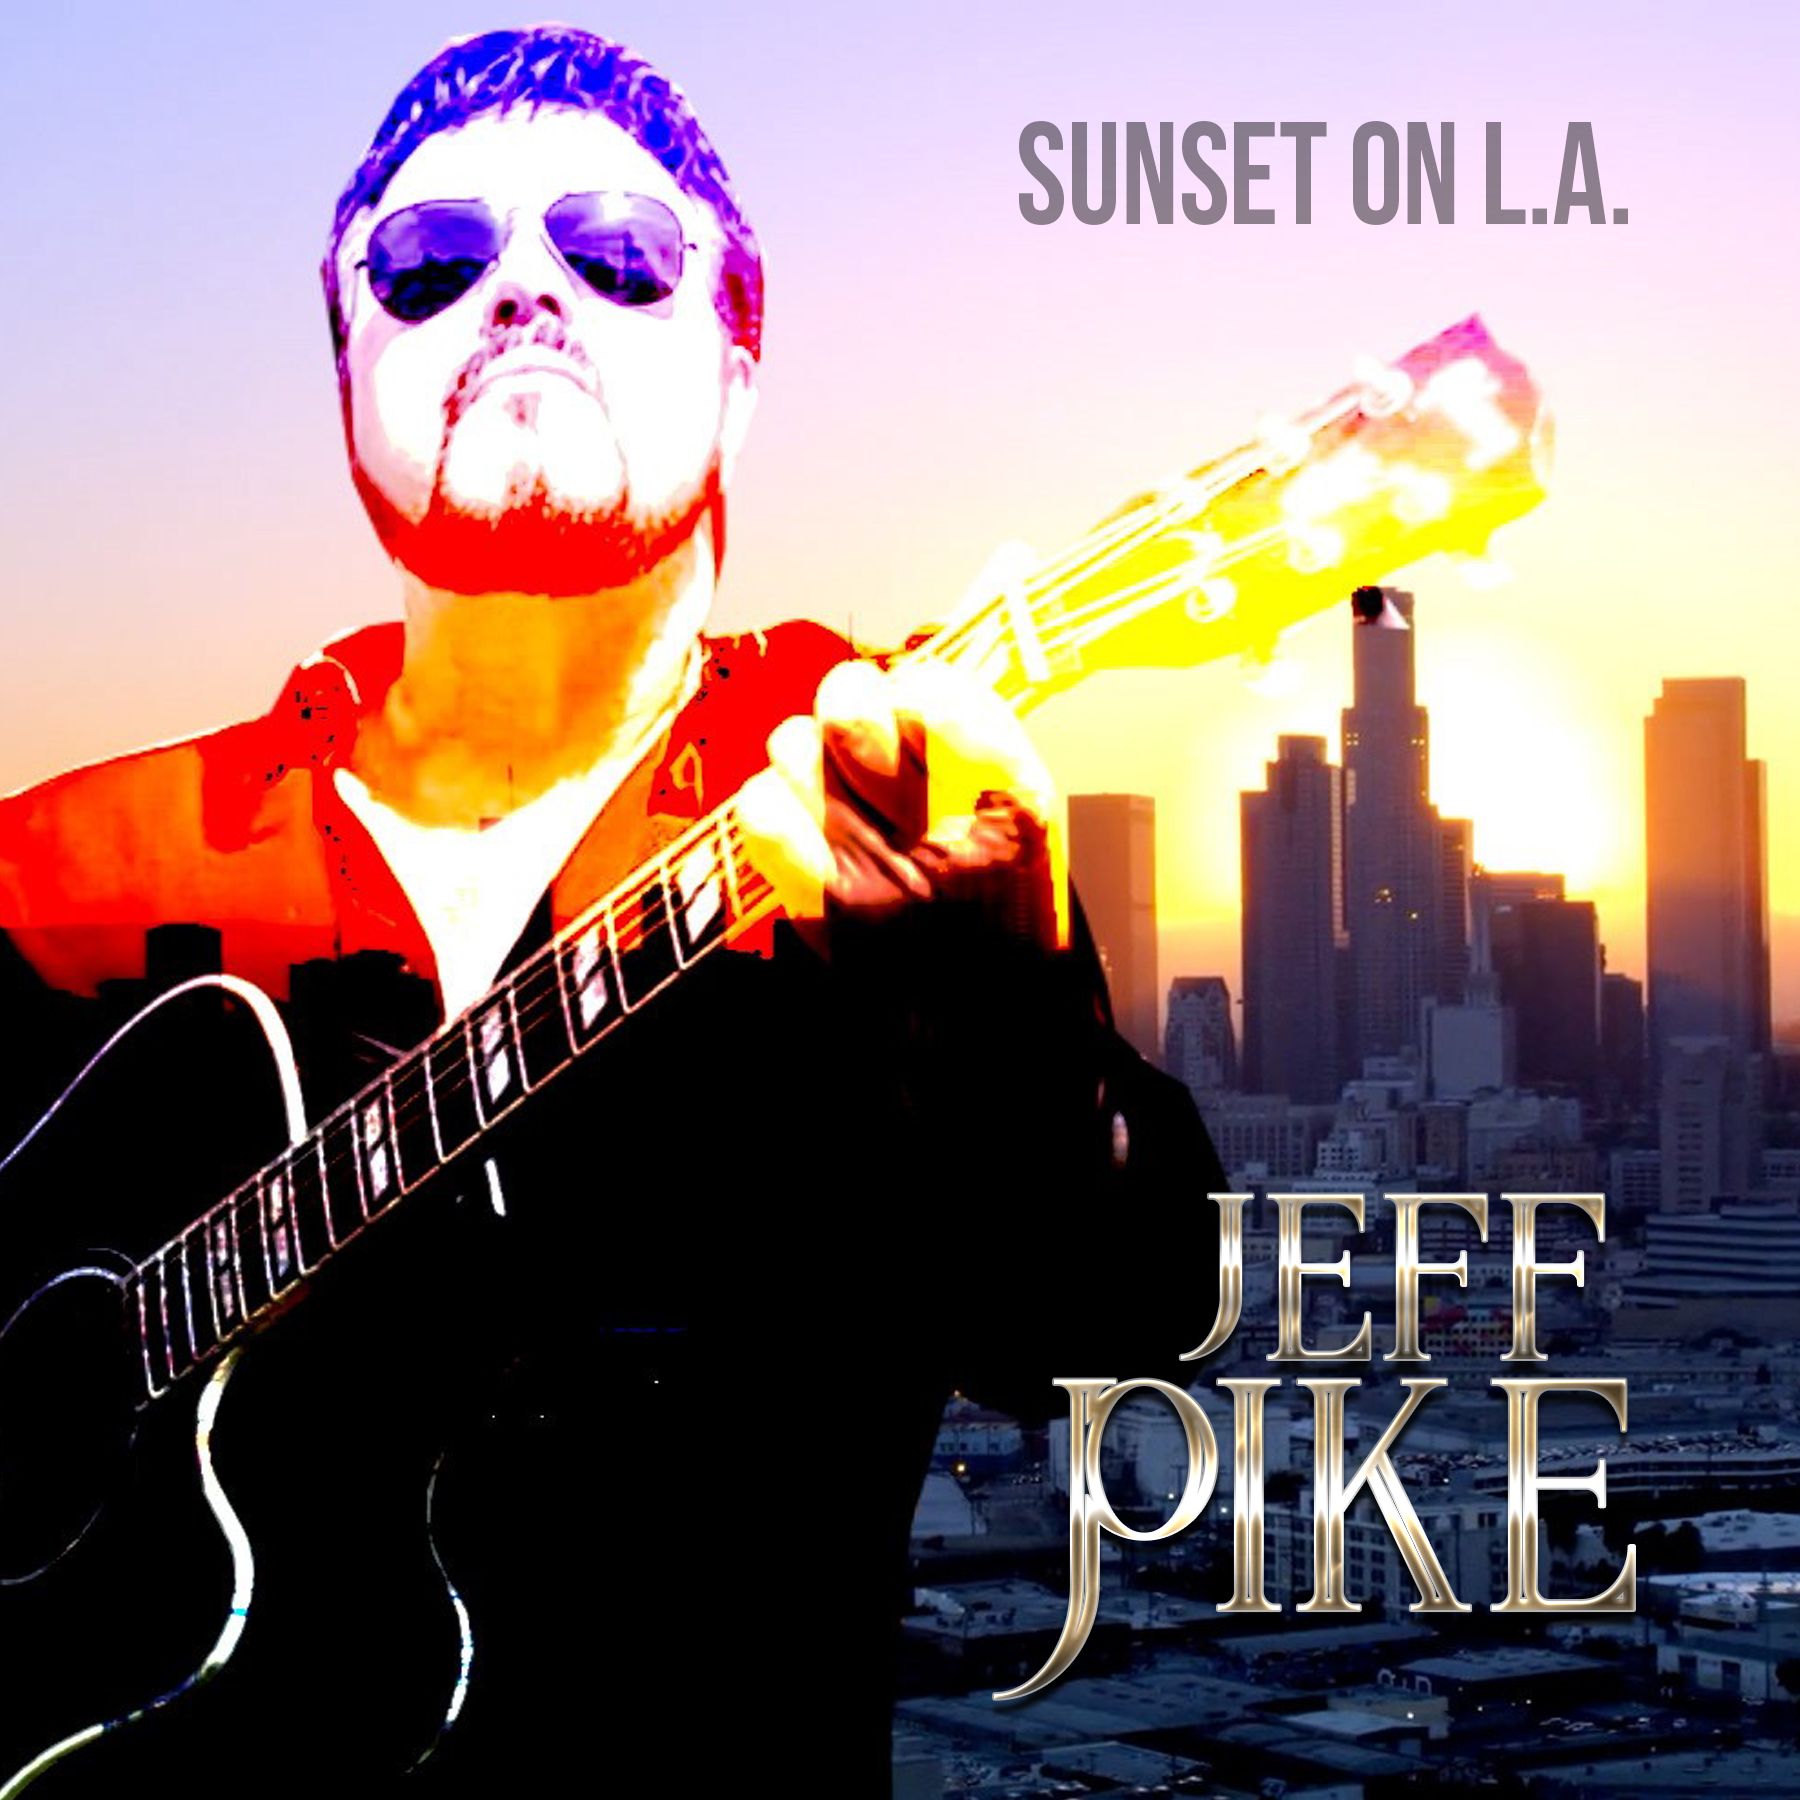 Jeff Pike